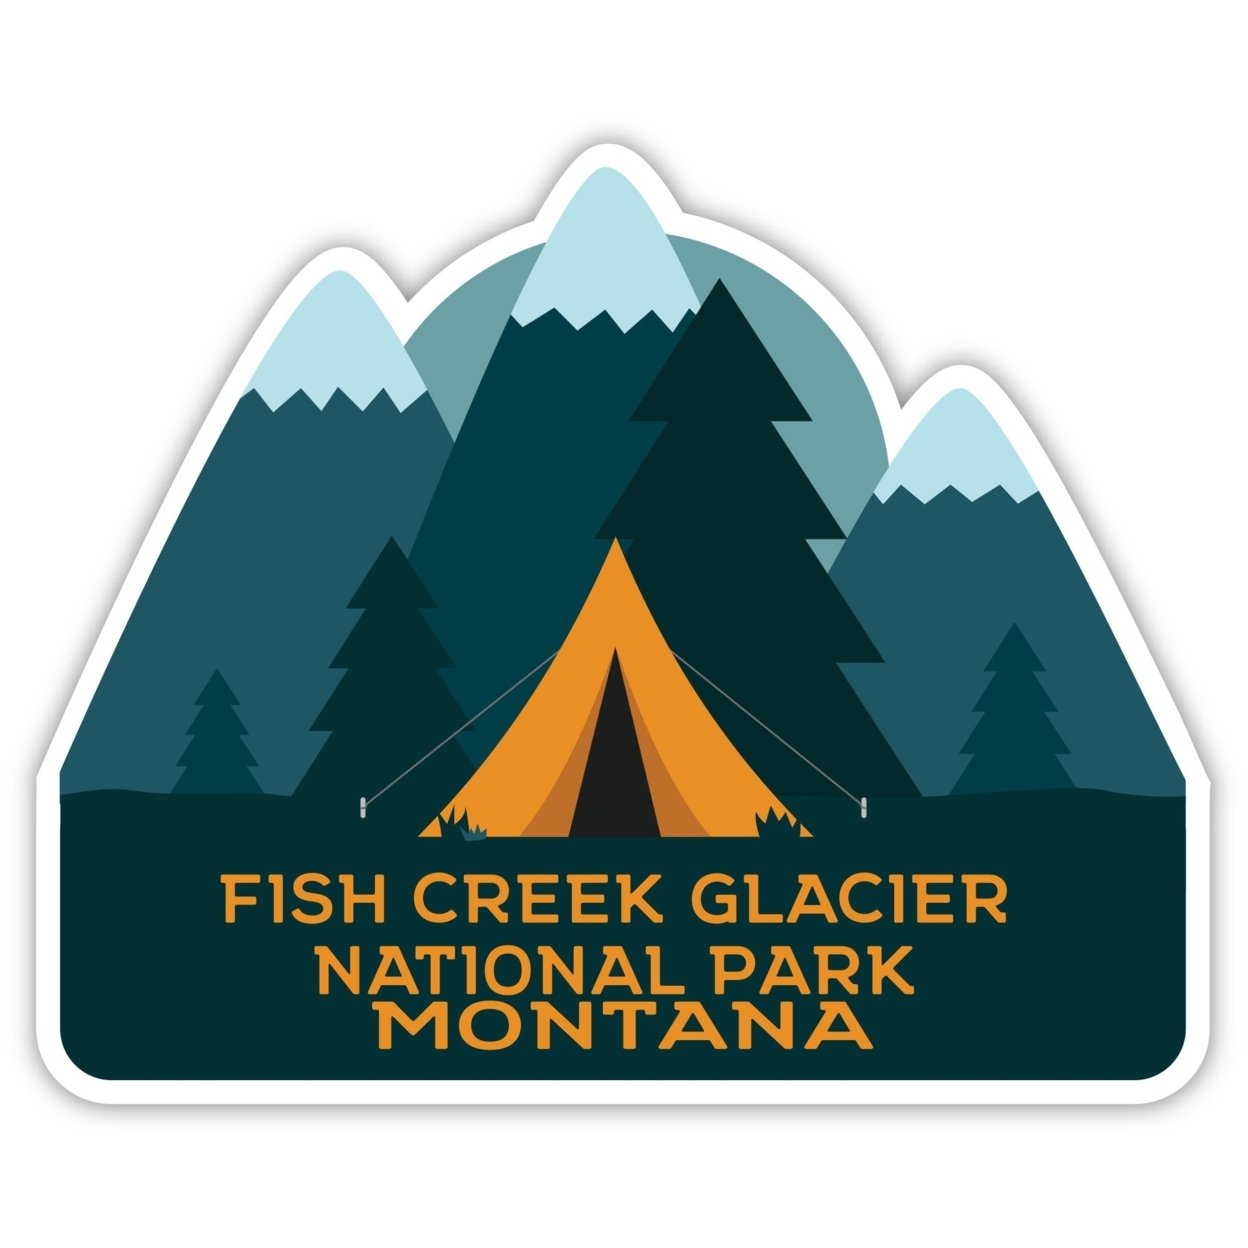 Fish Creek Glacier National Park Montana Souvenir Decorative Stickers (Choose Theme And Size) - 4-Pack, 8-Inch, Tent